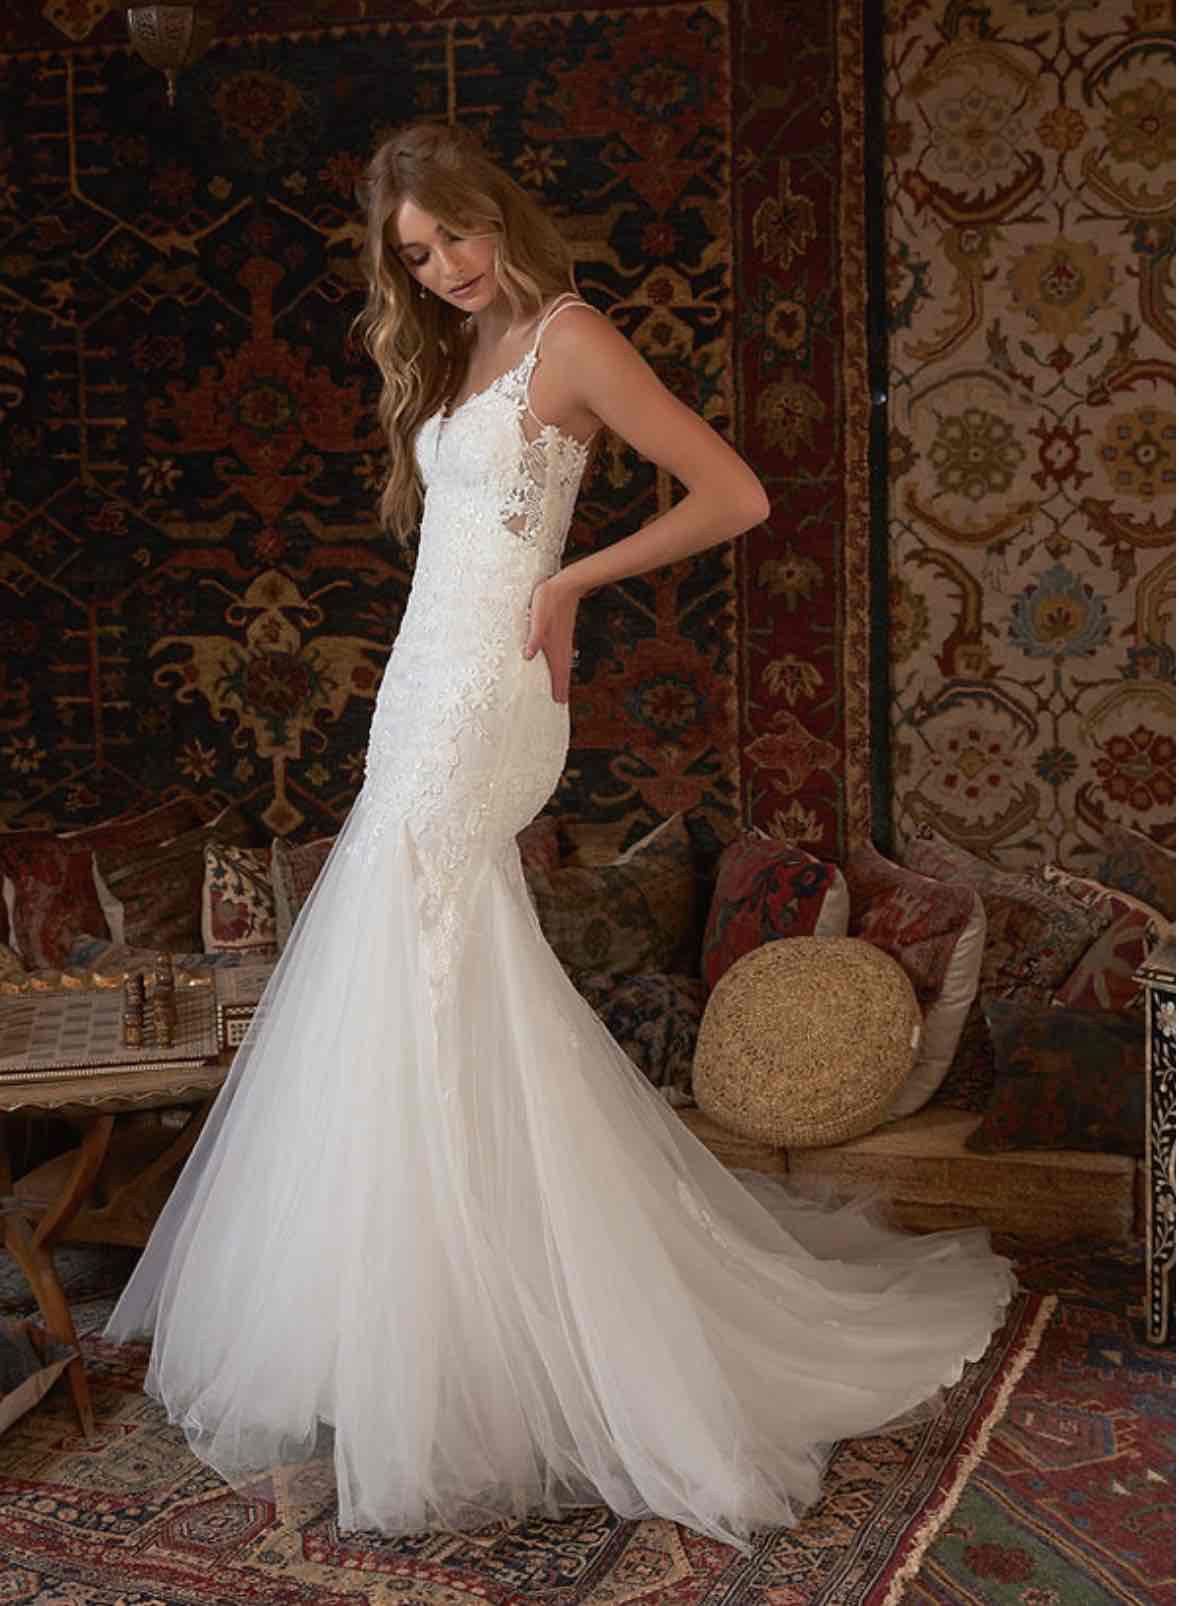 The Azazie Bridesmaid Dress Fit